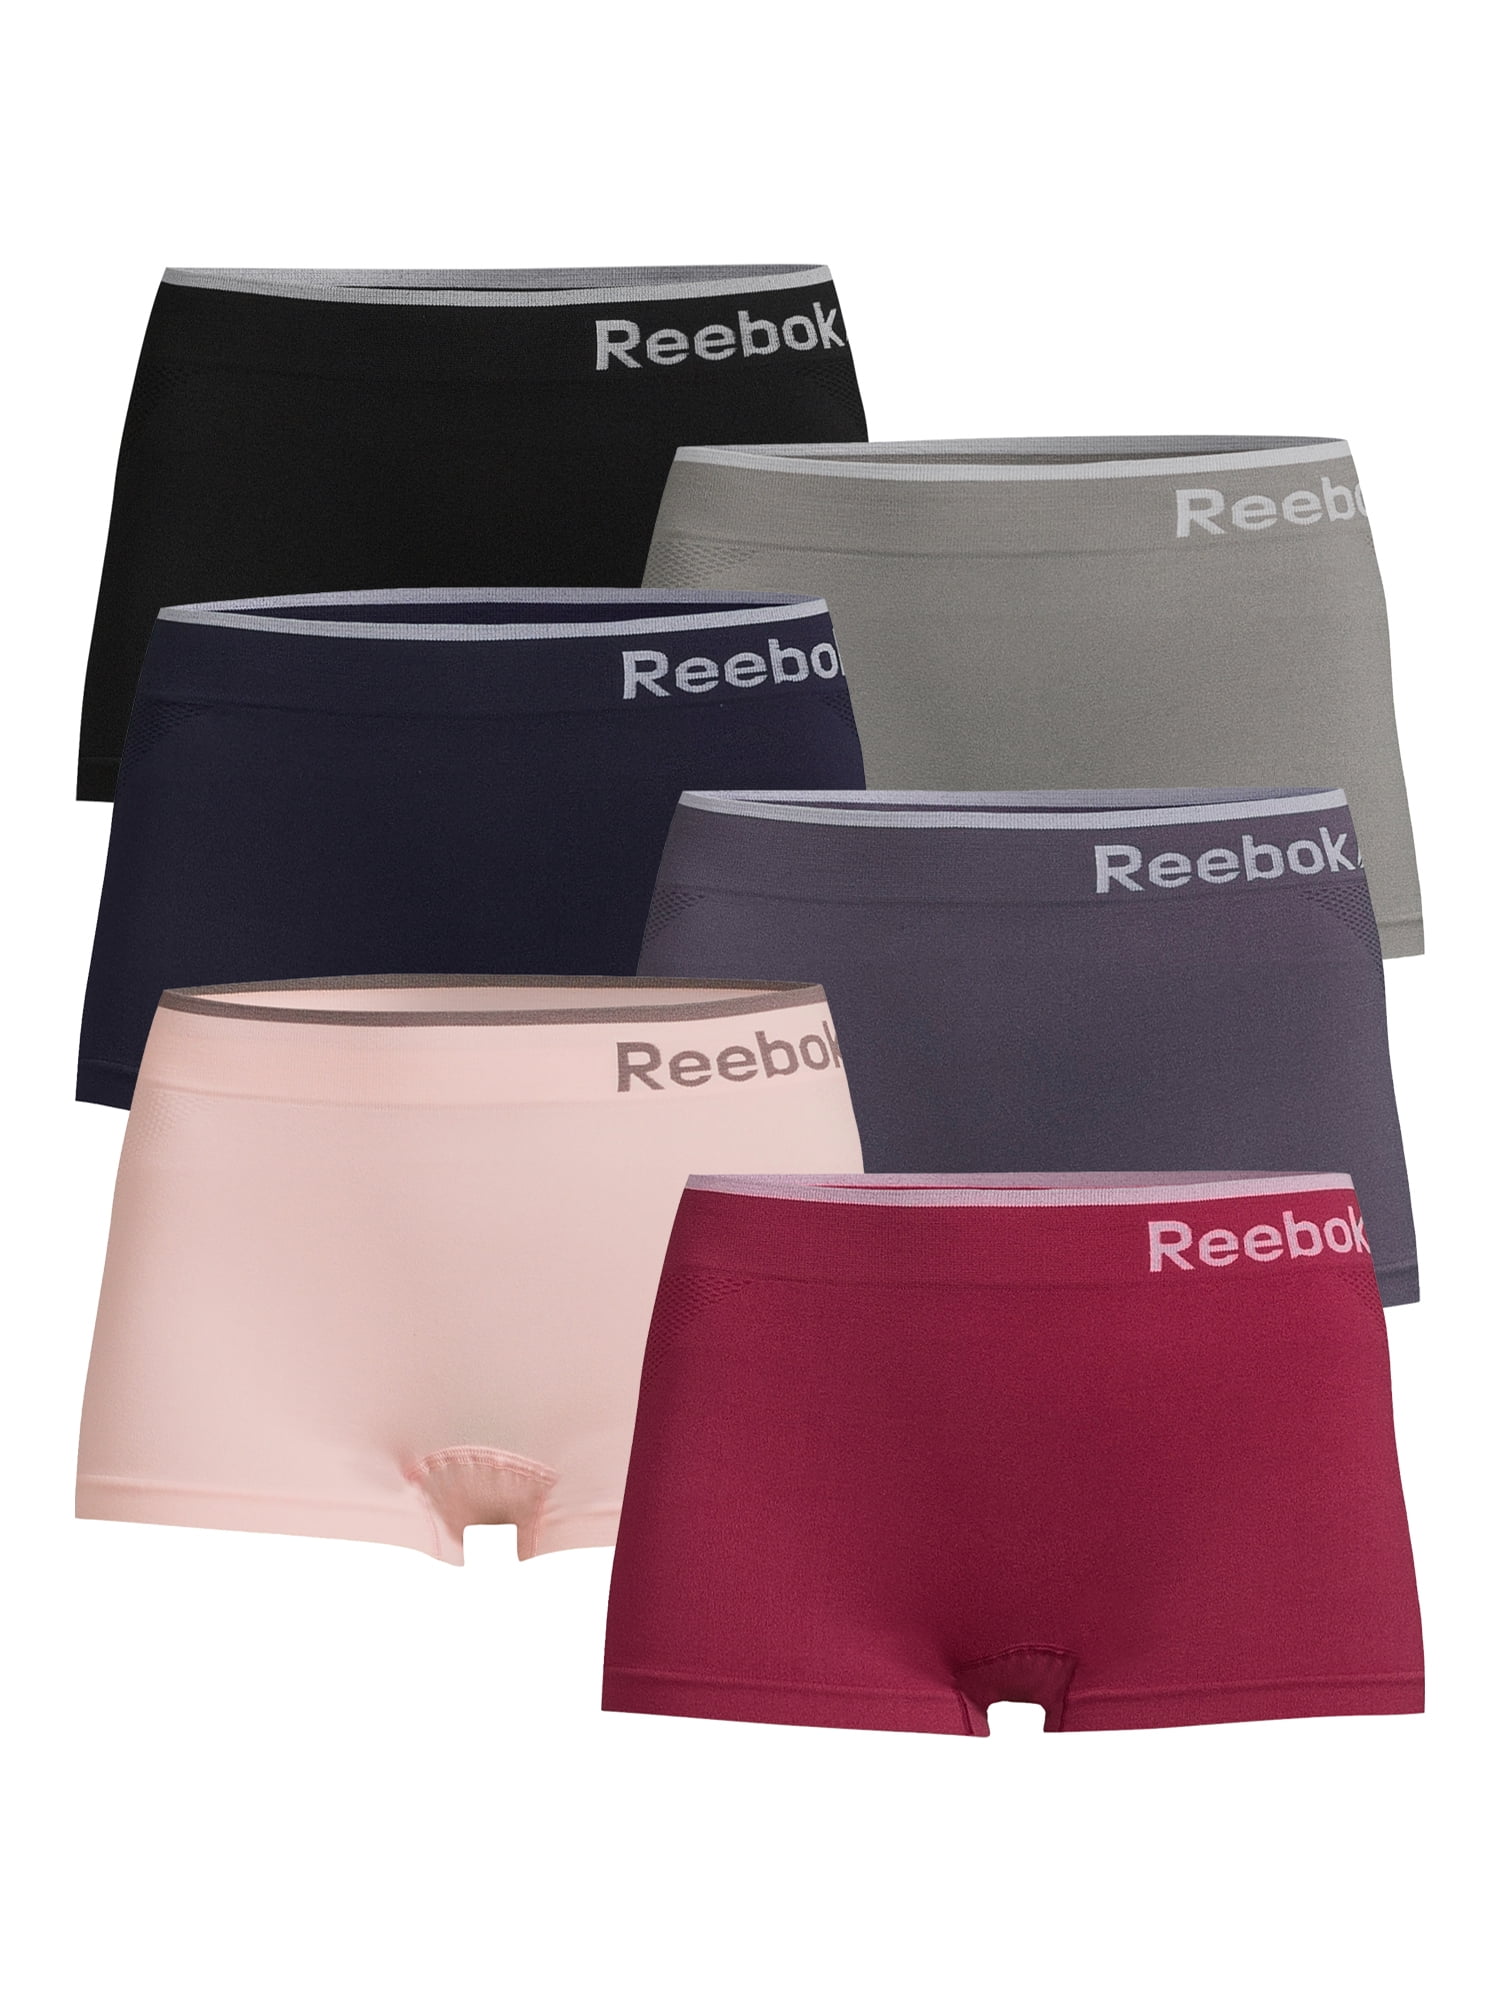 Reebok Women's Underwear - Seamless Boyshort Nepal